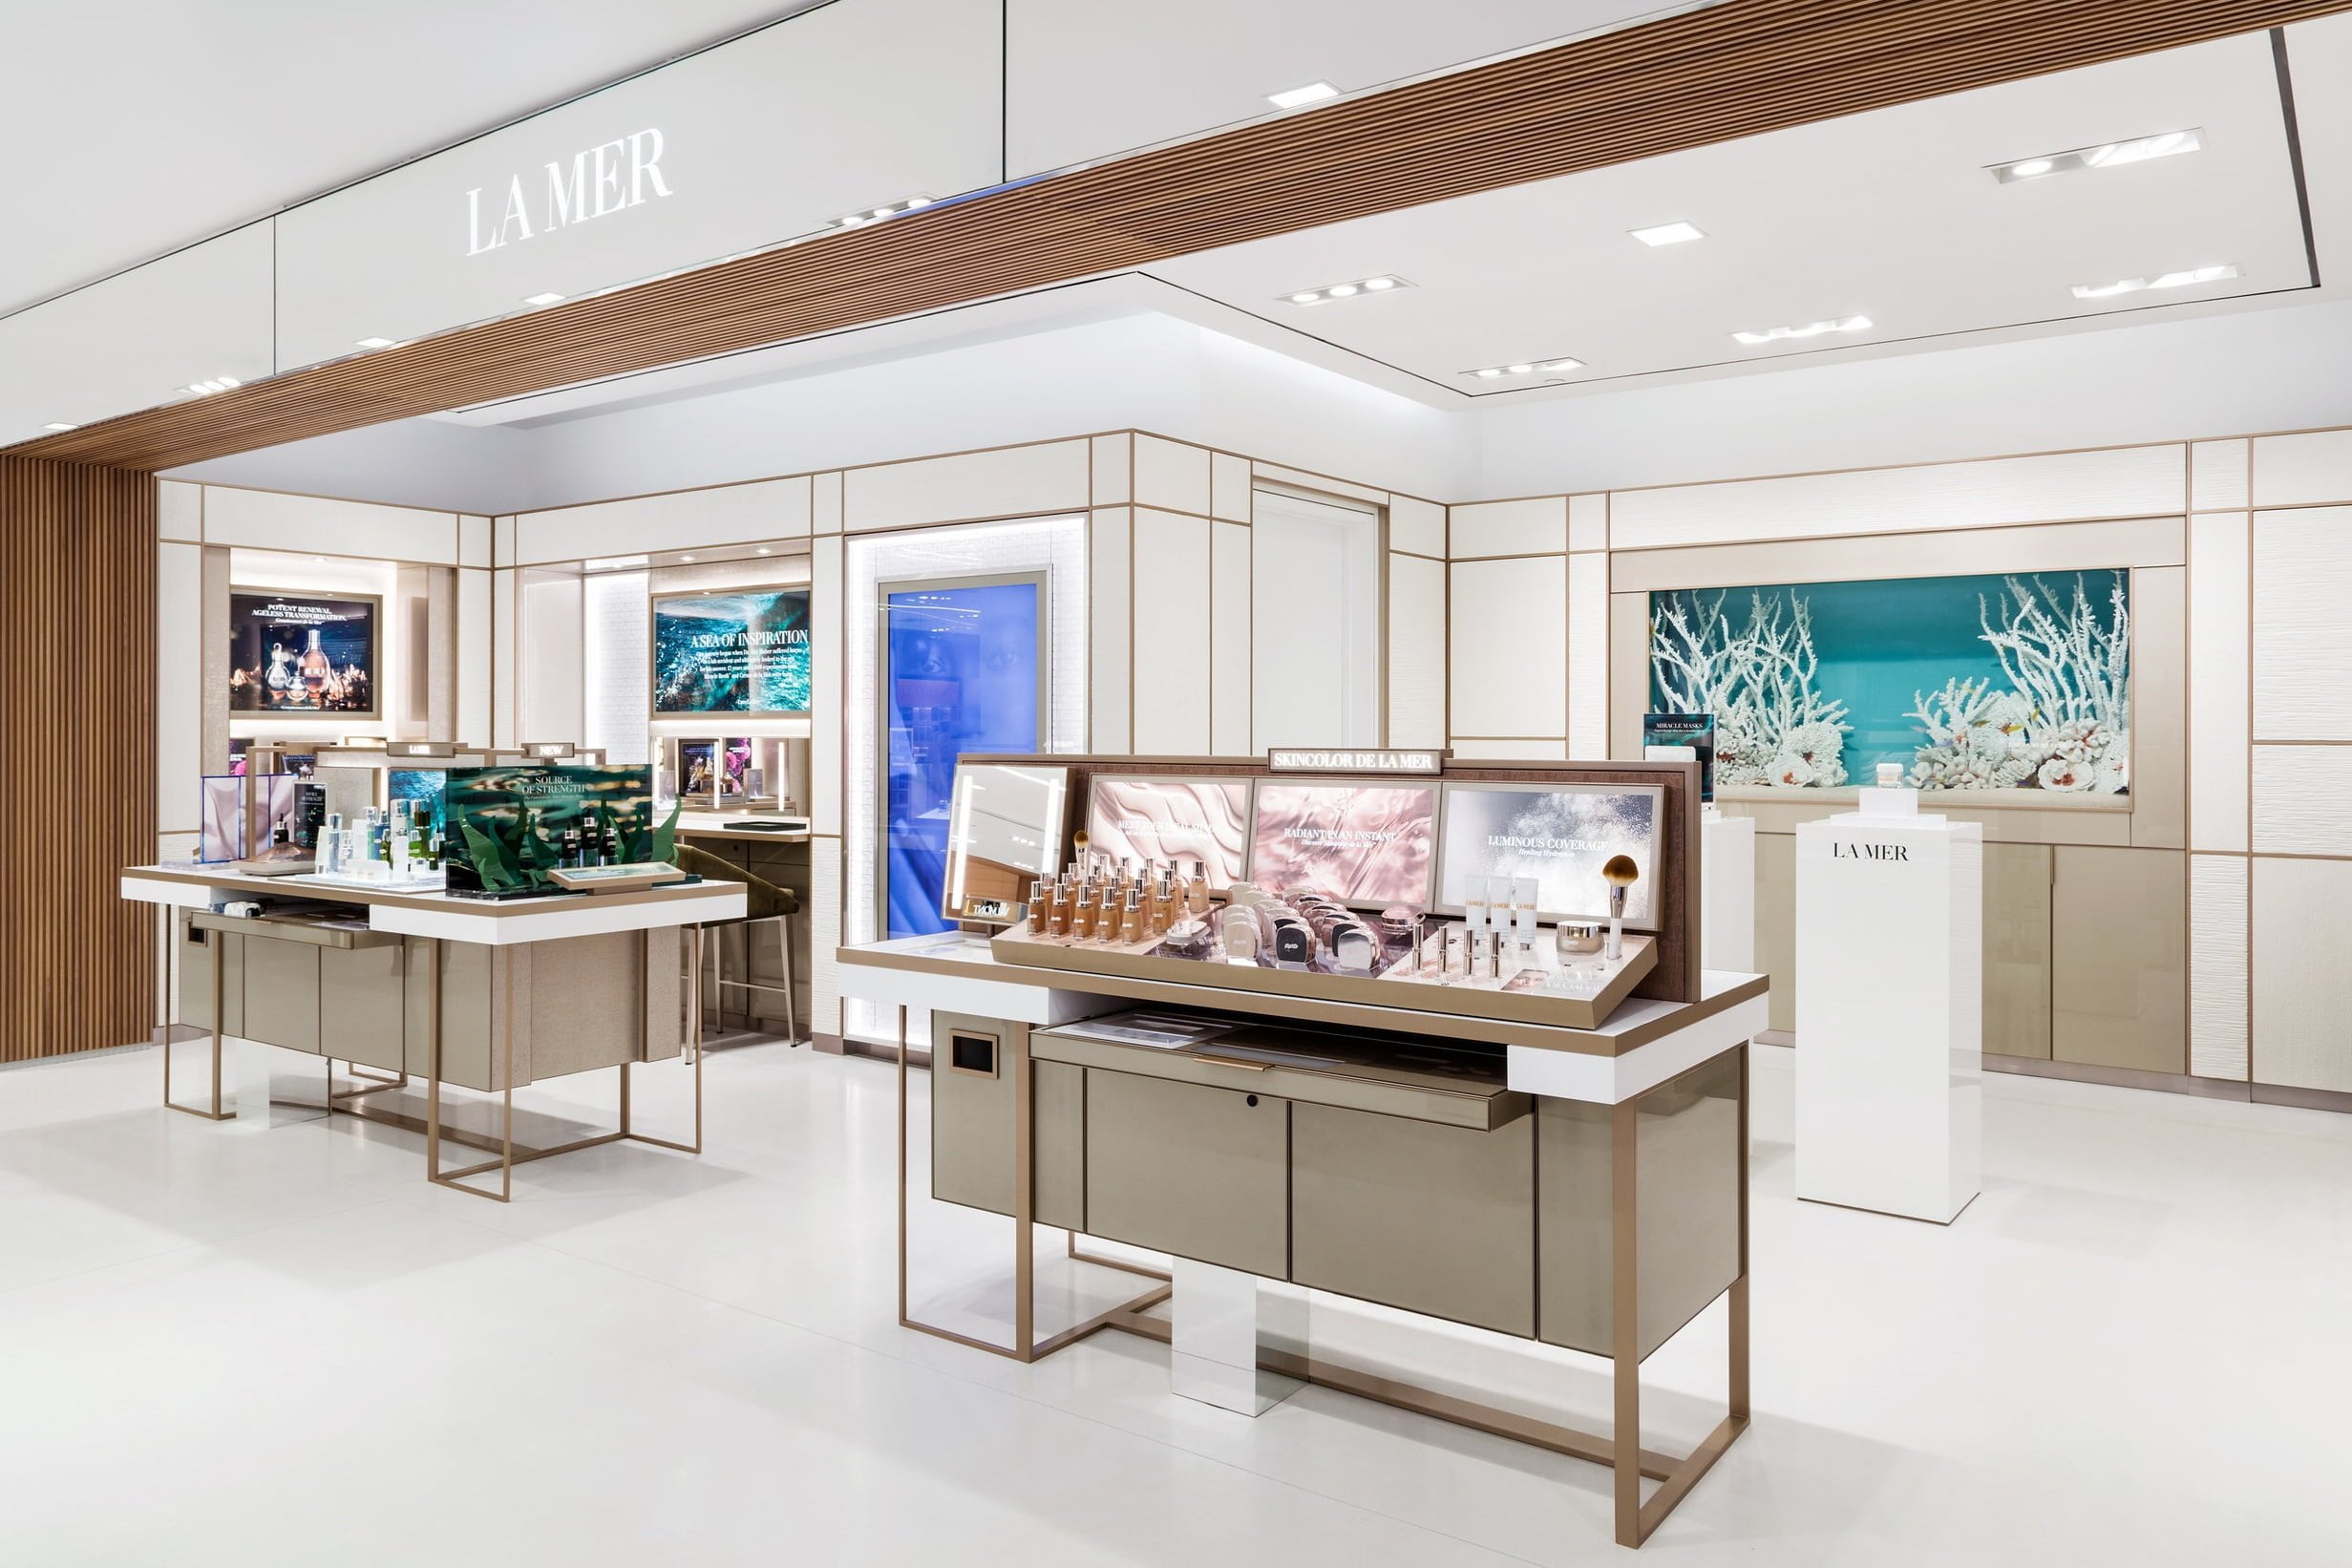 Louis Vuitton Holt Renfrew Bloor St Toronto store, Canada